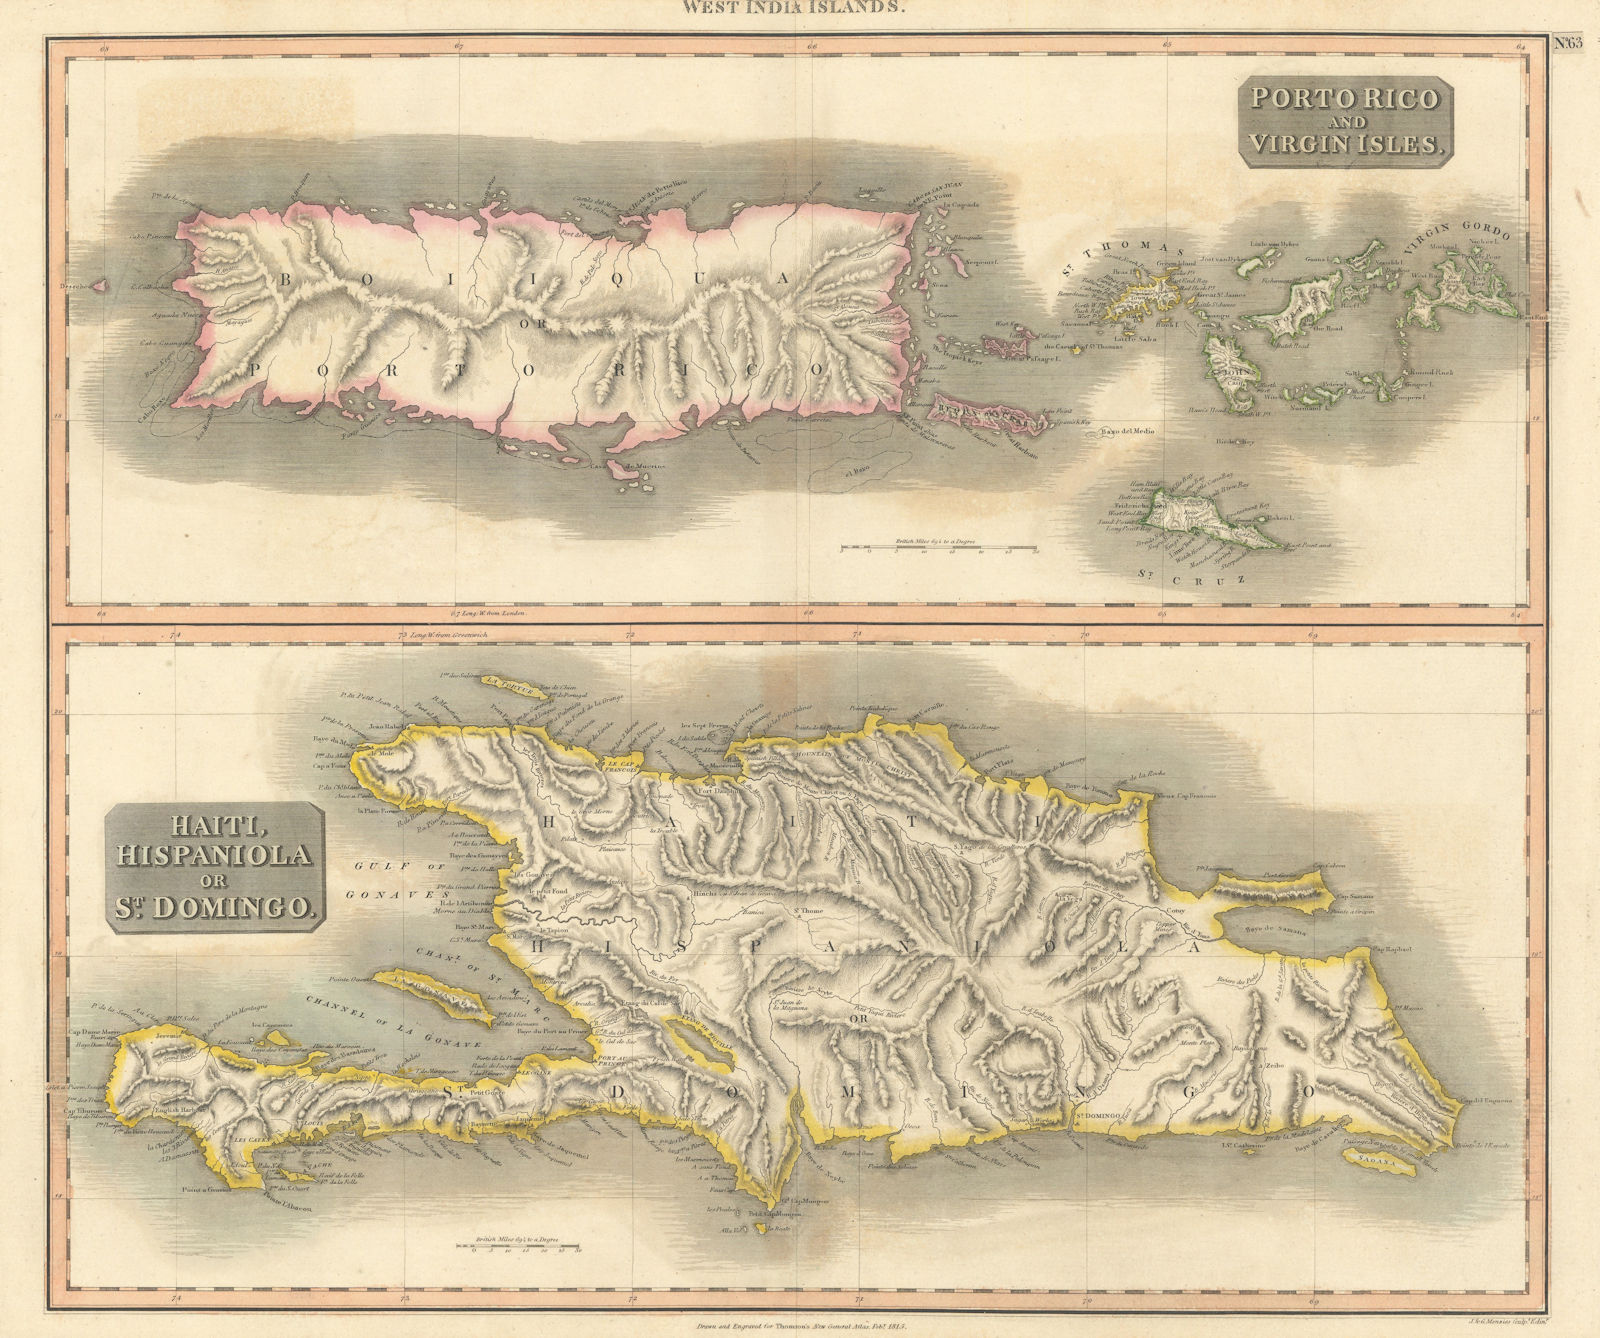 Associate Product Puerto Rico & Virgin Islands. Haiti, Hispaniola or St. Domingo. THOMSON 1817 map